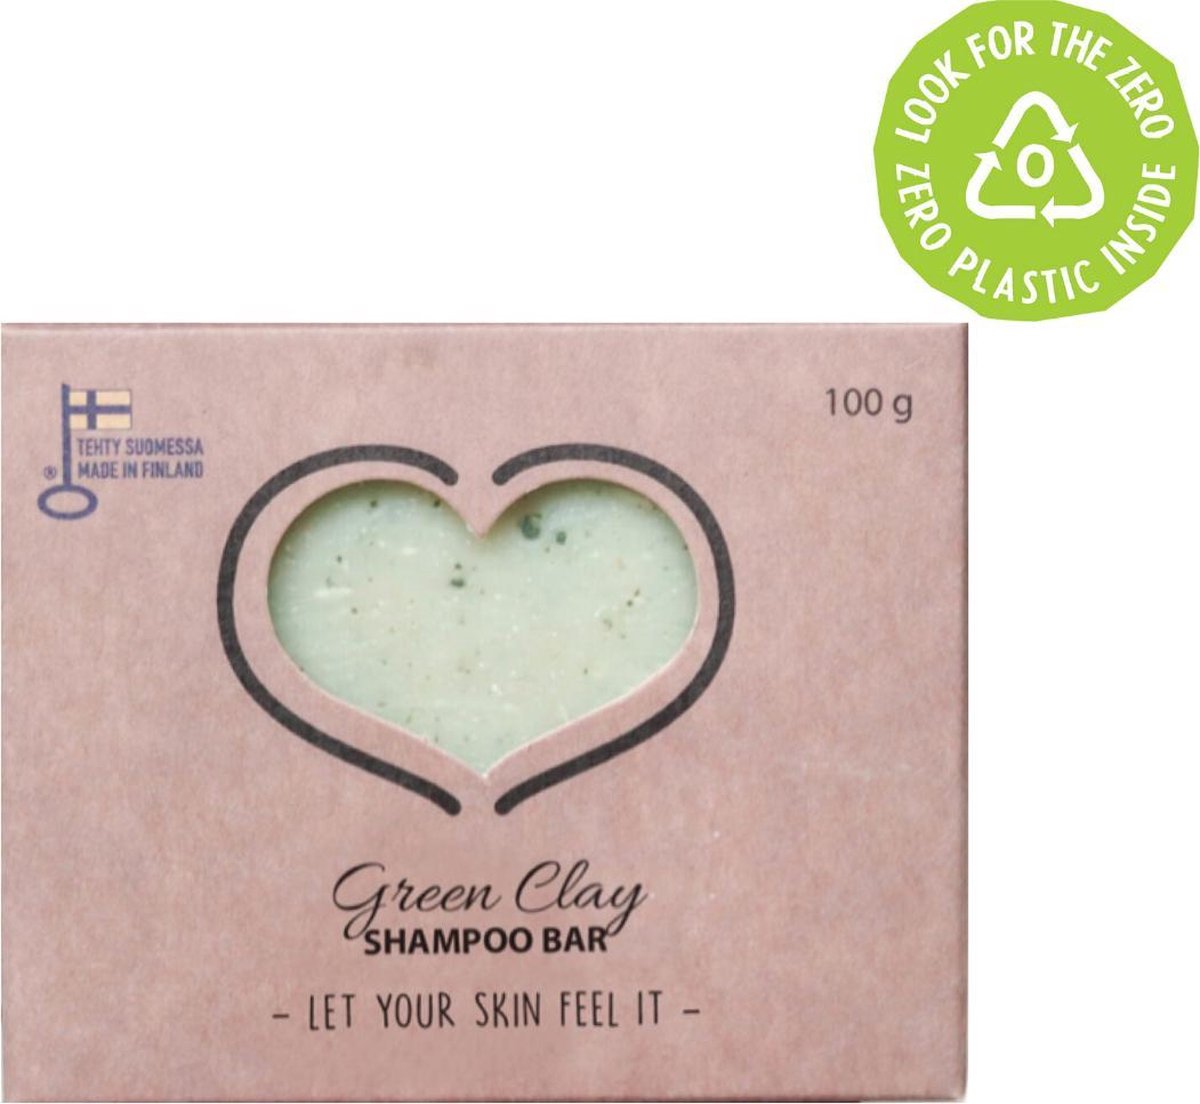 Catteco - Shampoo bar Green Clay - Shampoo vet haar- Plasticvrij - Duurzaam -Vegan - 100g